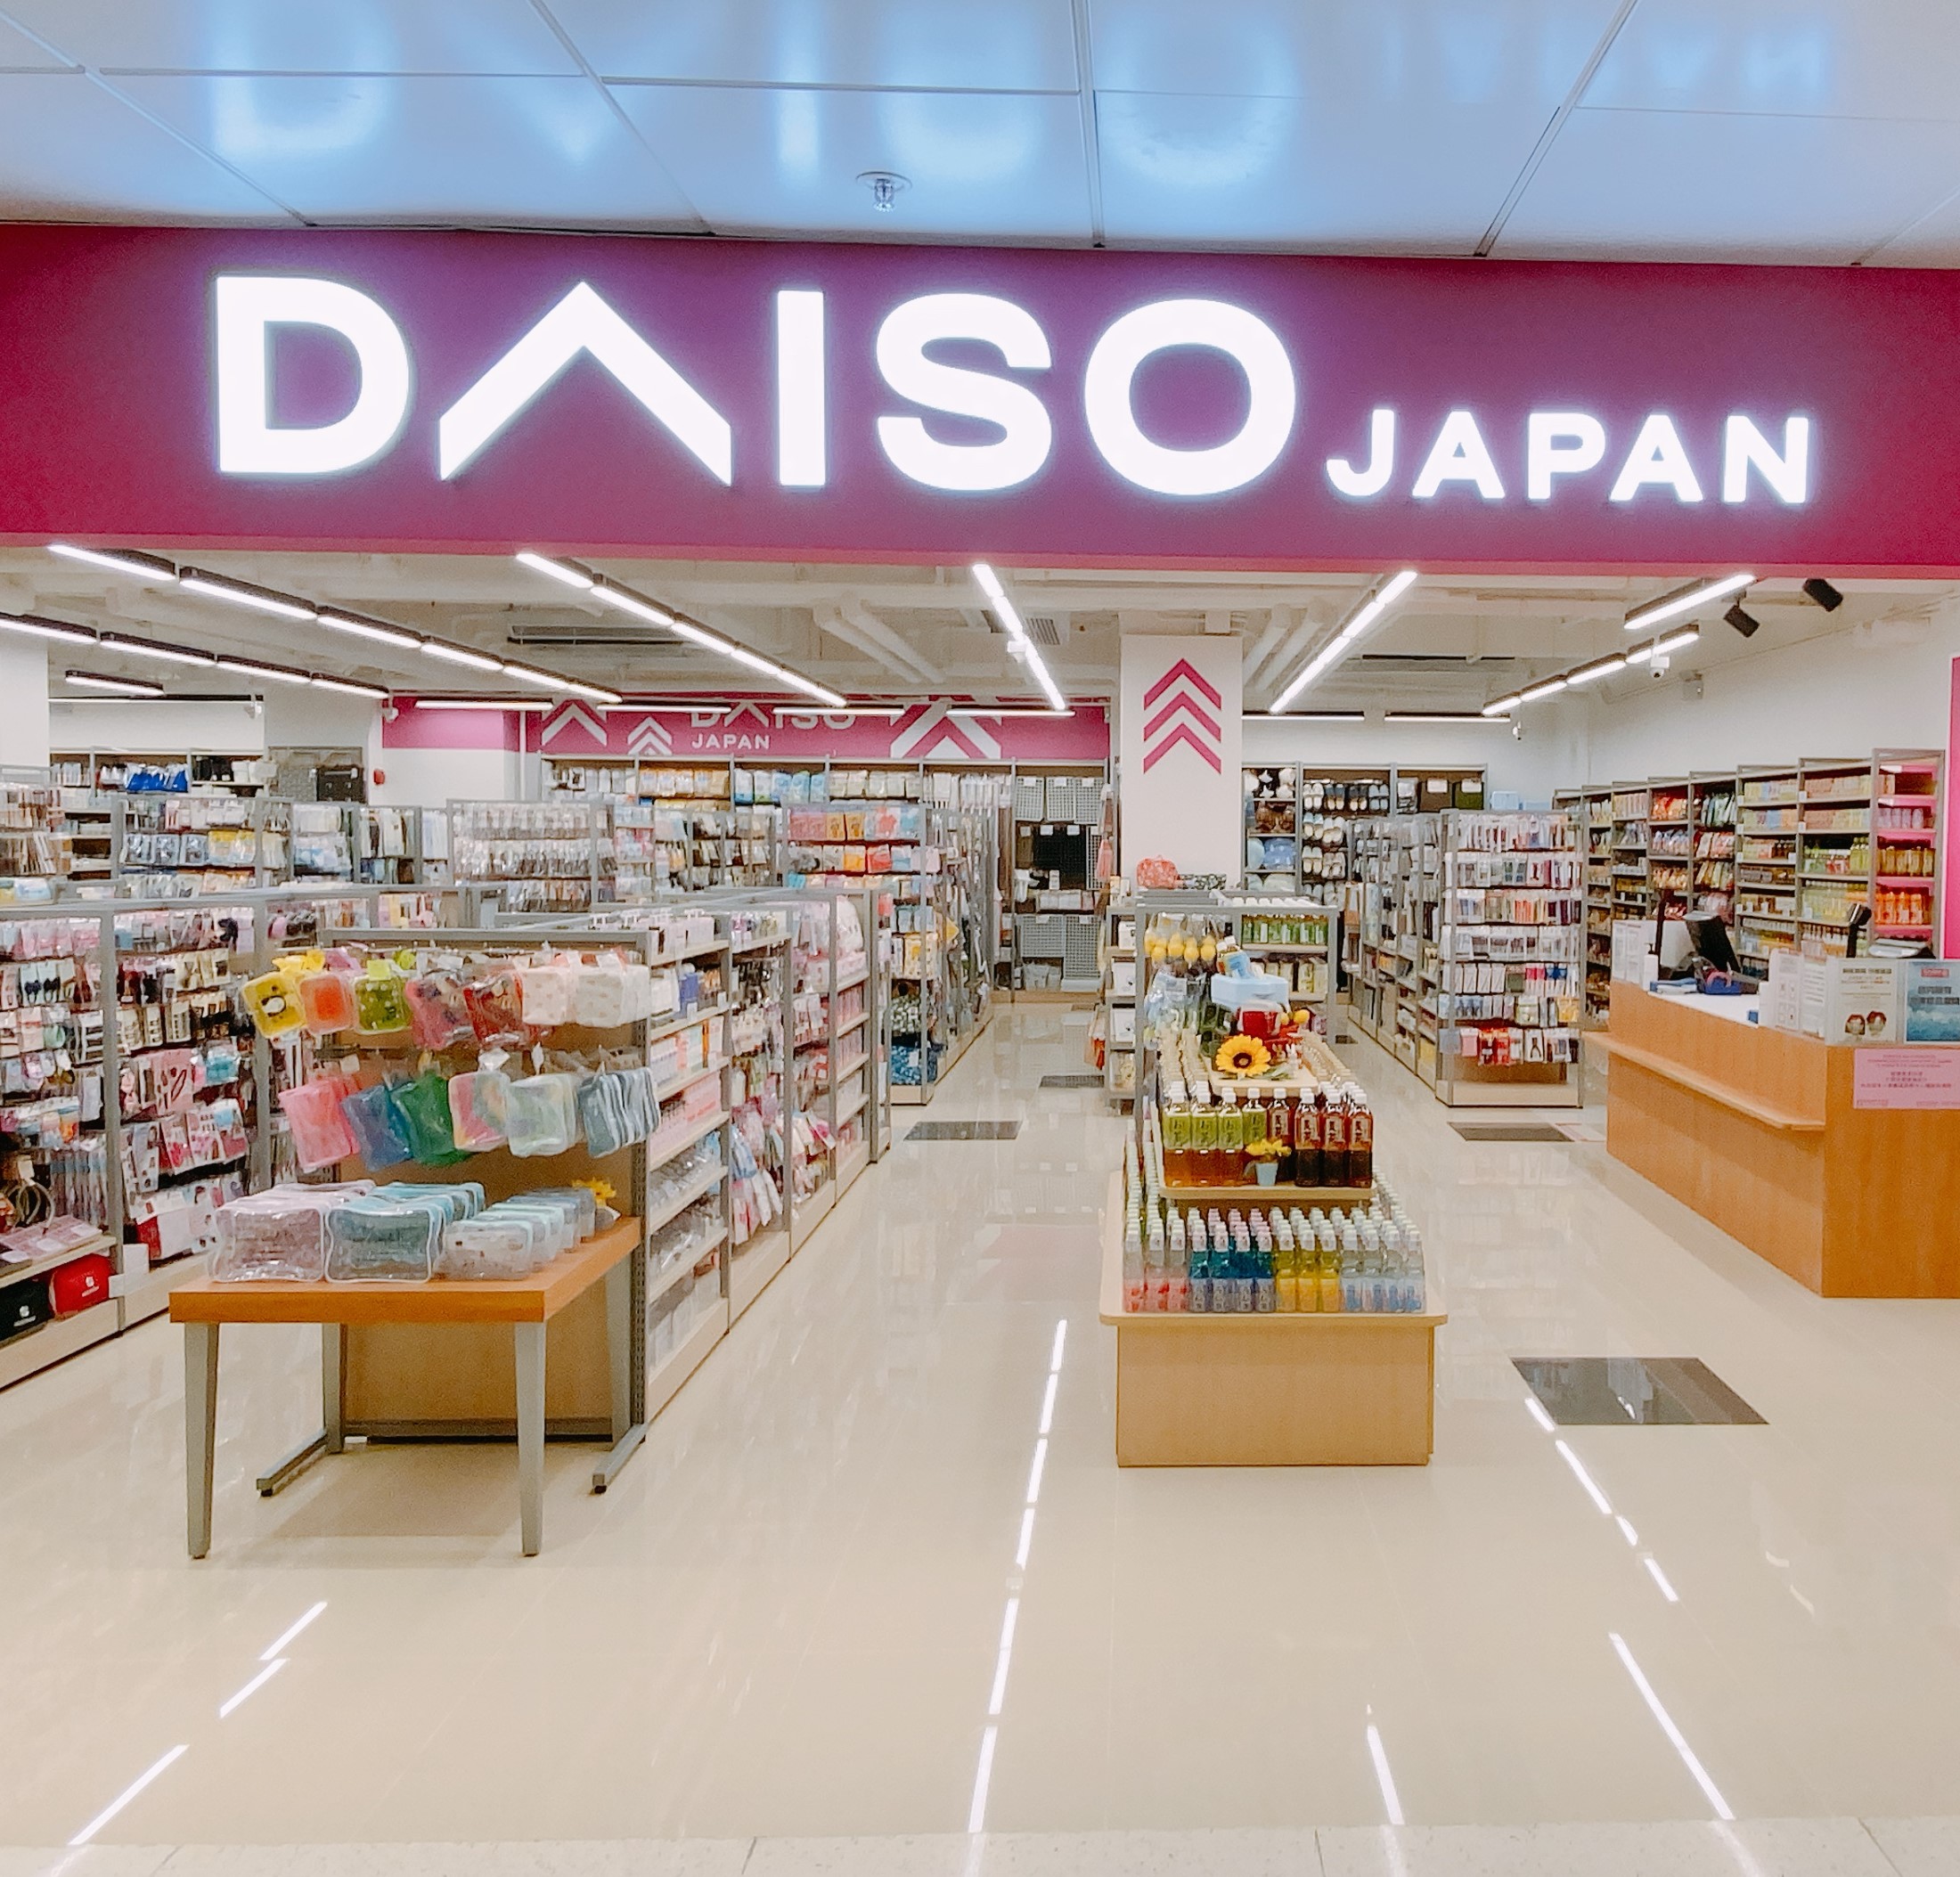 Daiso Japan Amoy Shop